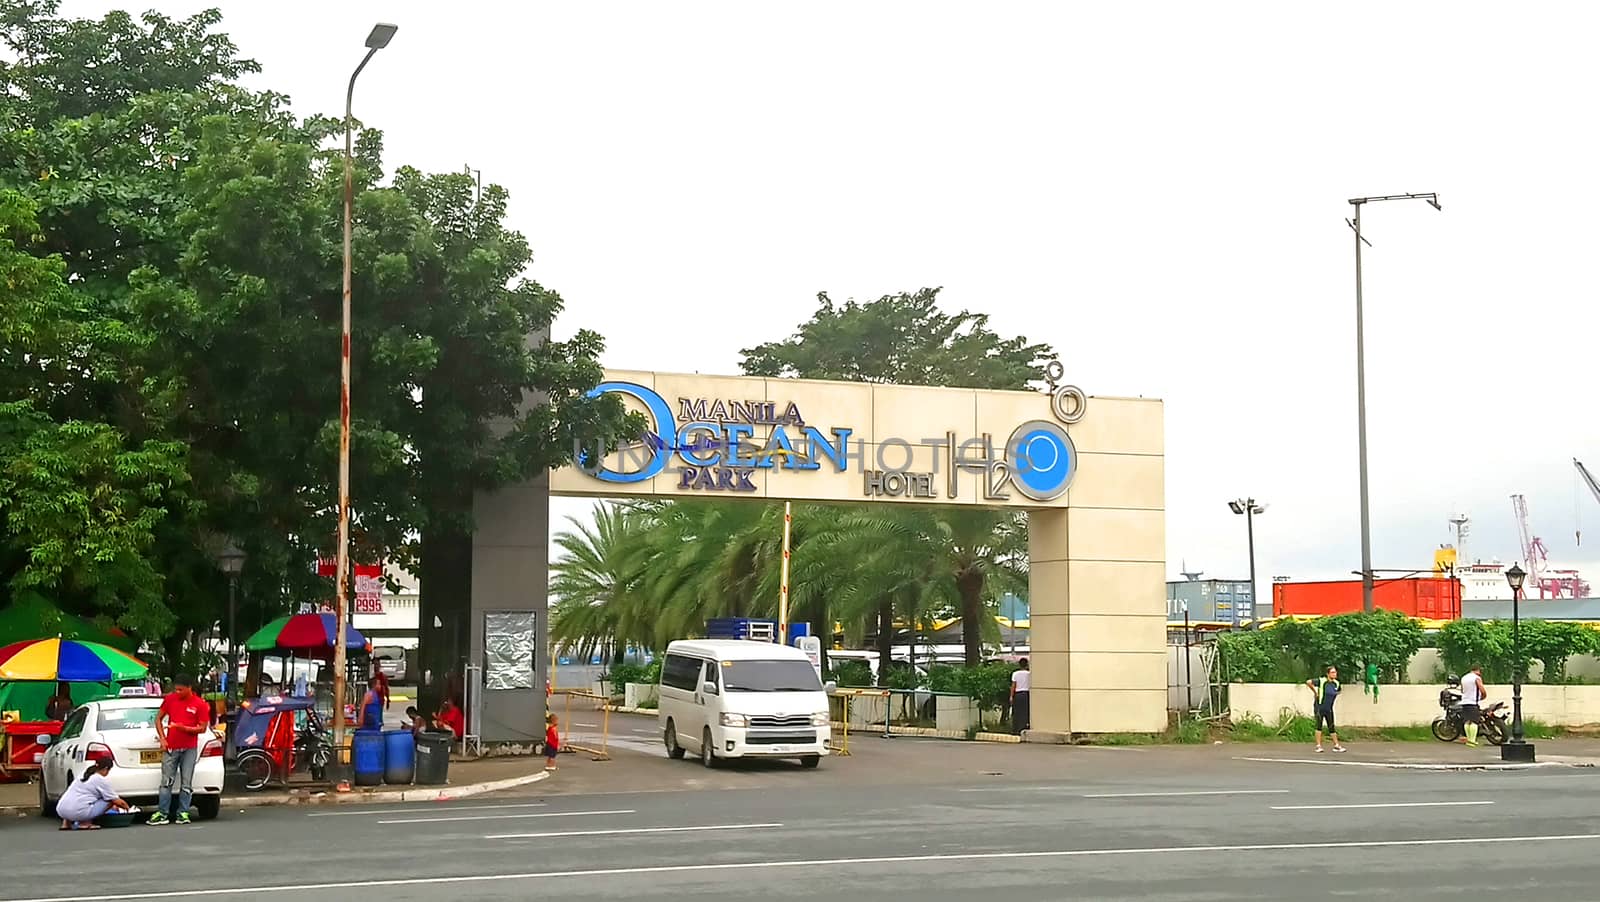 MANILA, PH - JAN 2 - Manila ocean park entrance arch on January 2, 2017 in Manila, Philippines.